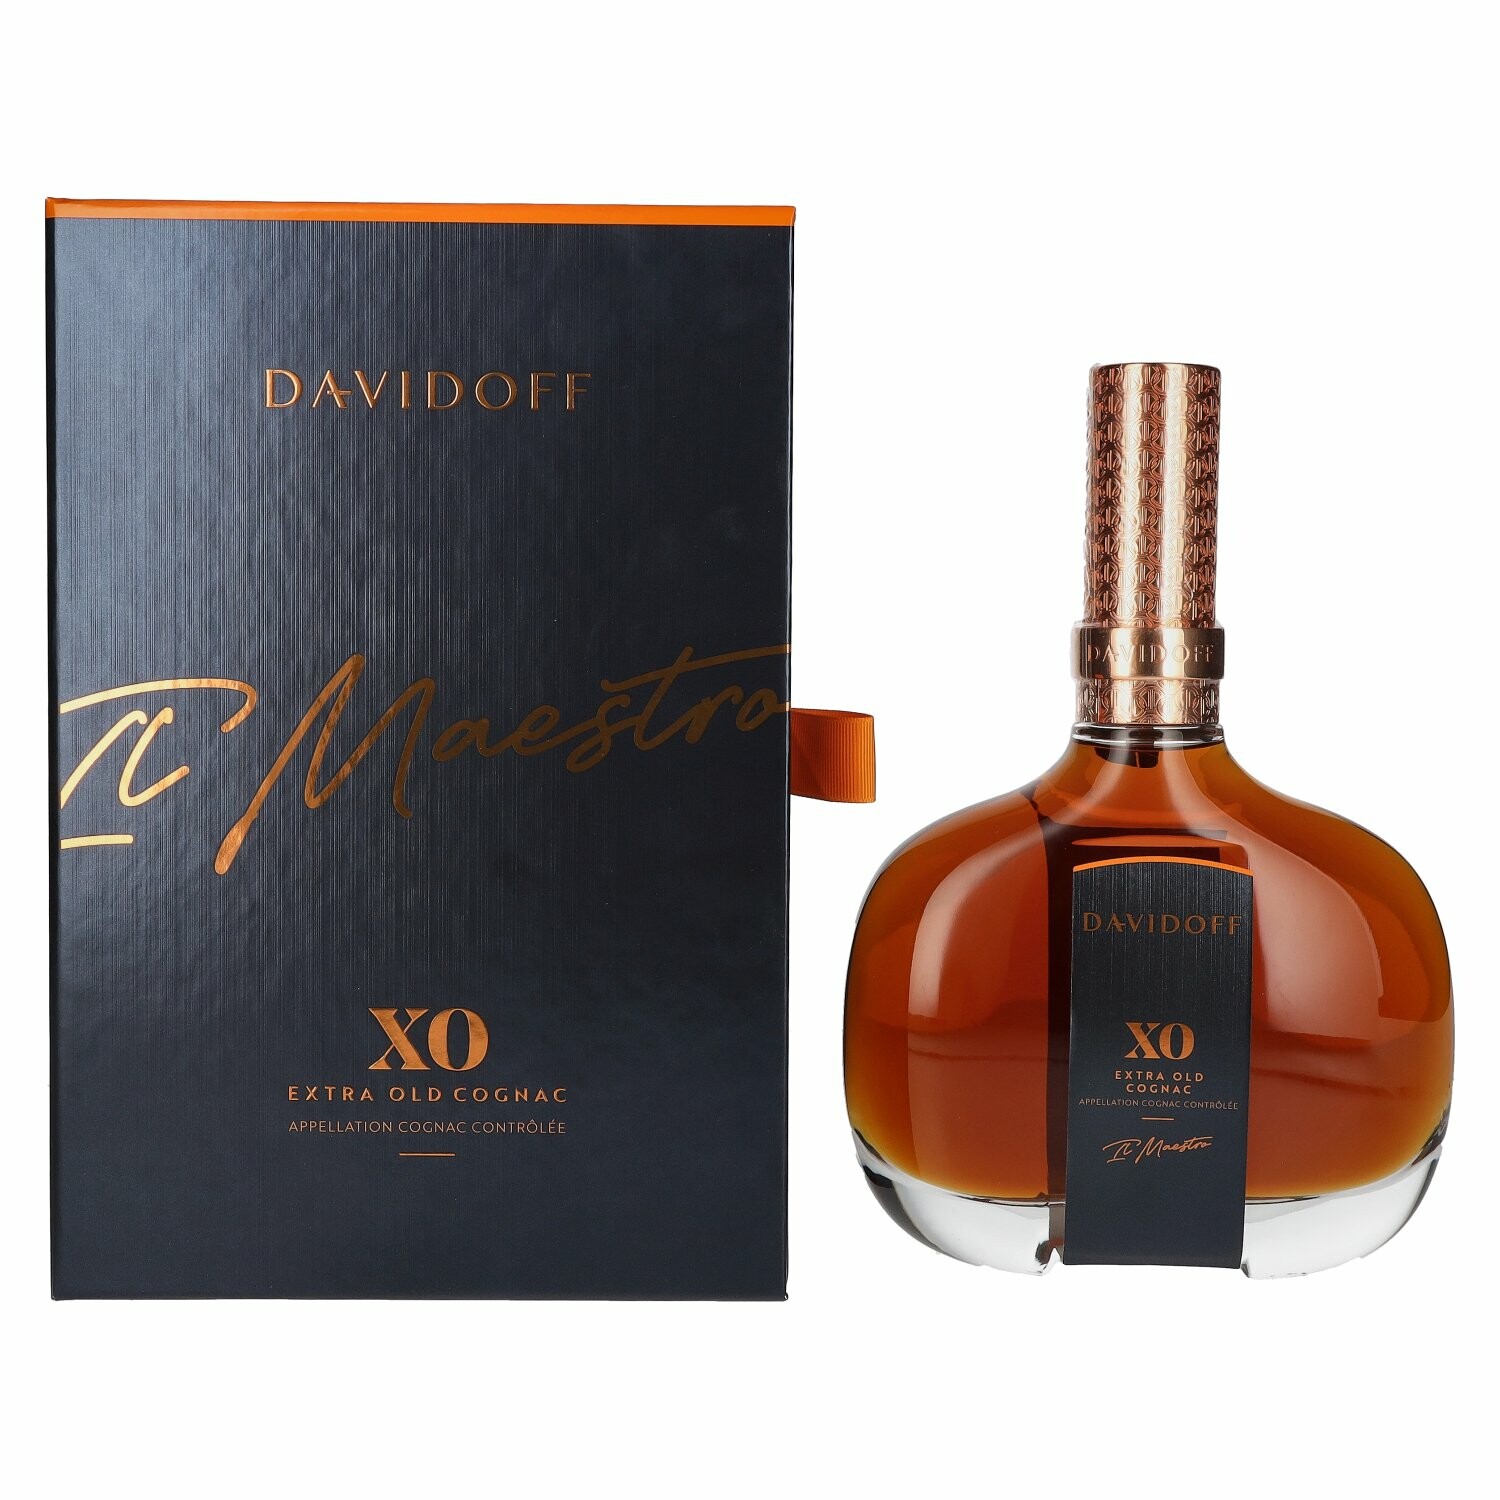 Davidoff XO II Maestro Extra Old Cognac 40% Vol. 0,7l in Giftbox